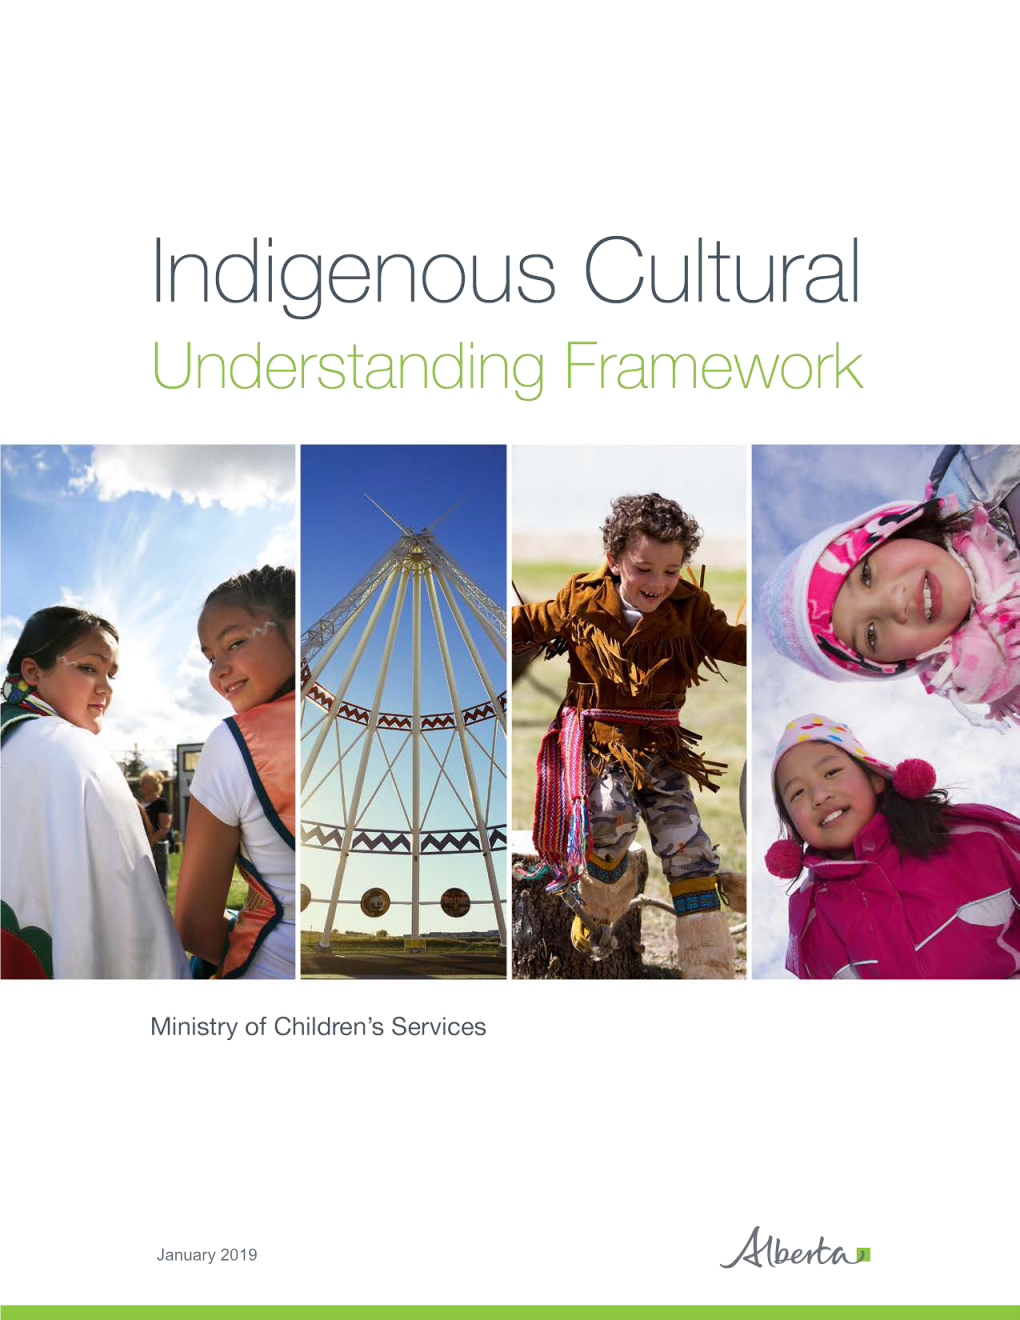 Indigenous Cultural Understanding Framework (ICUF) Began This Work in Ceremony